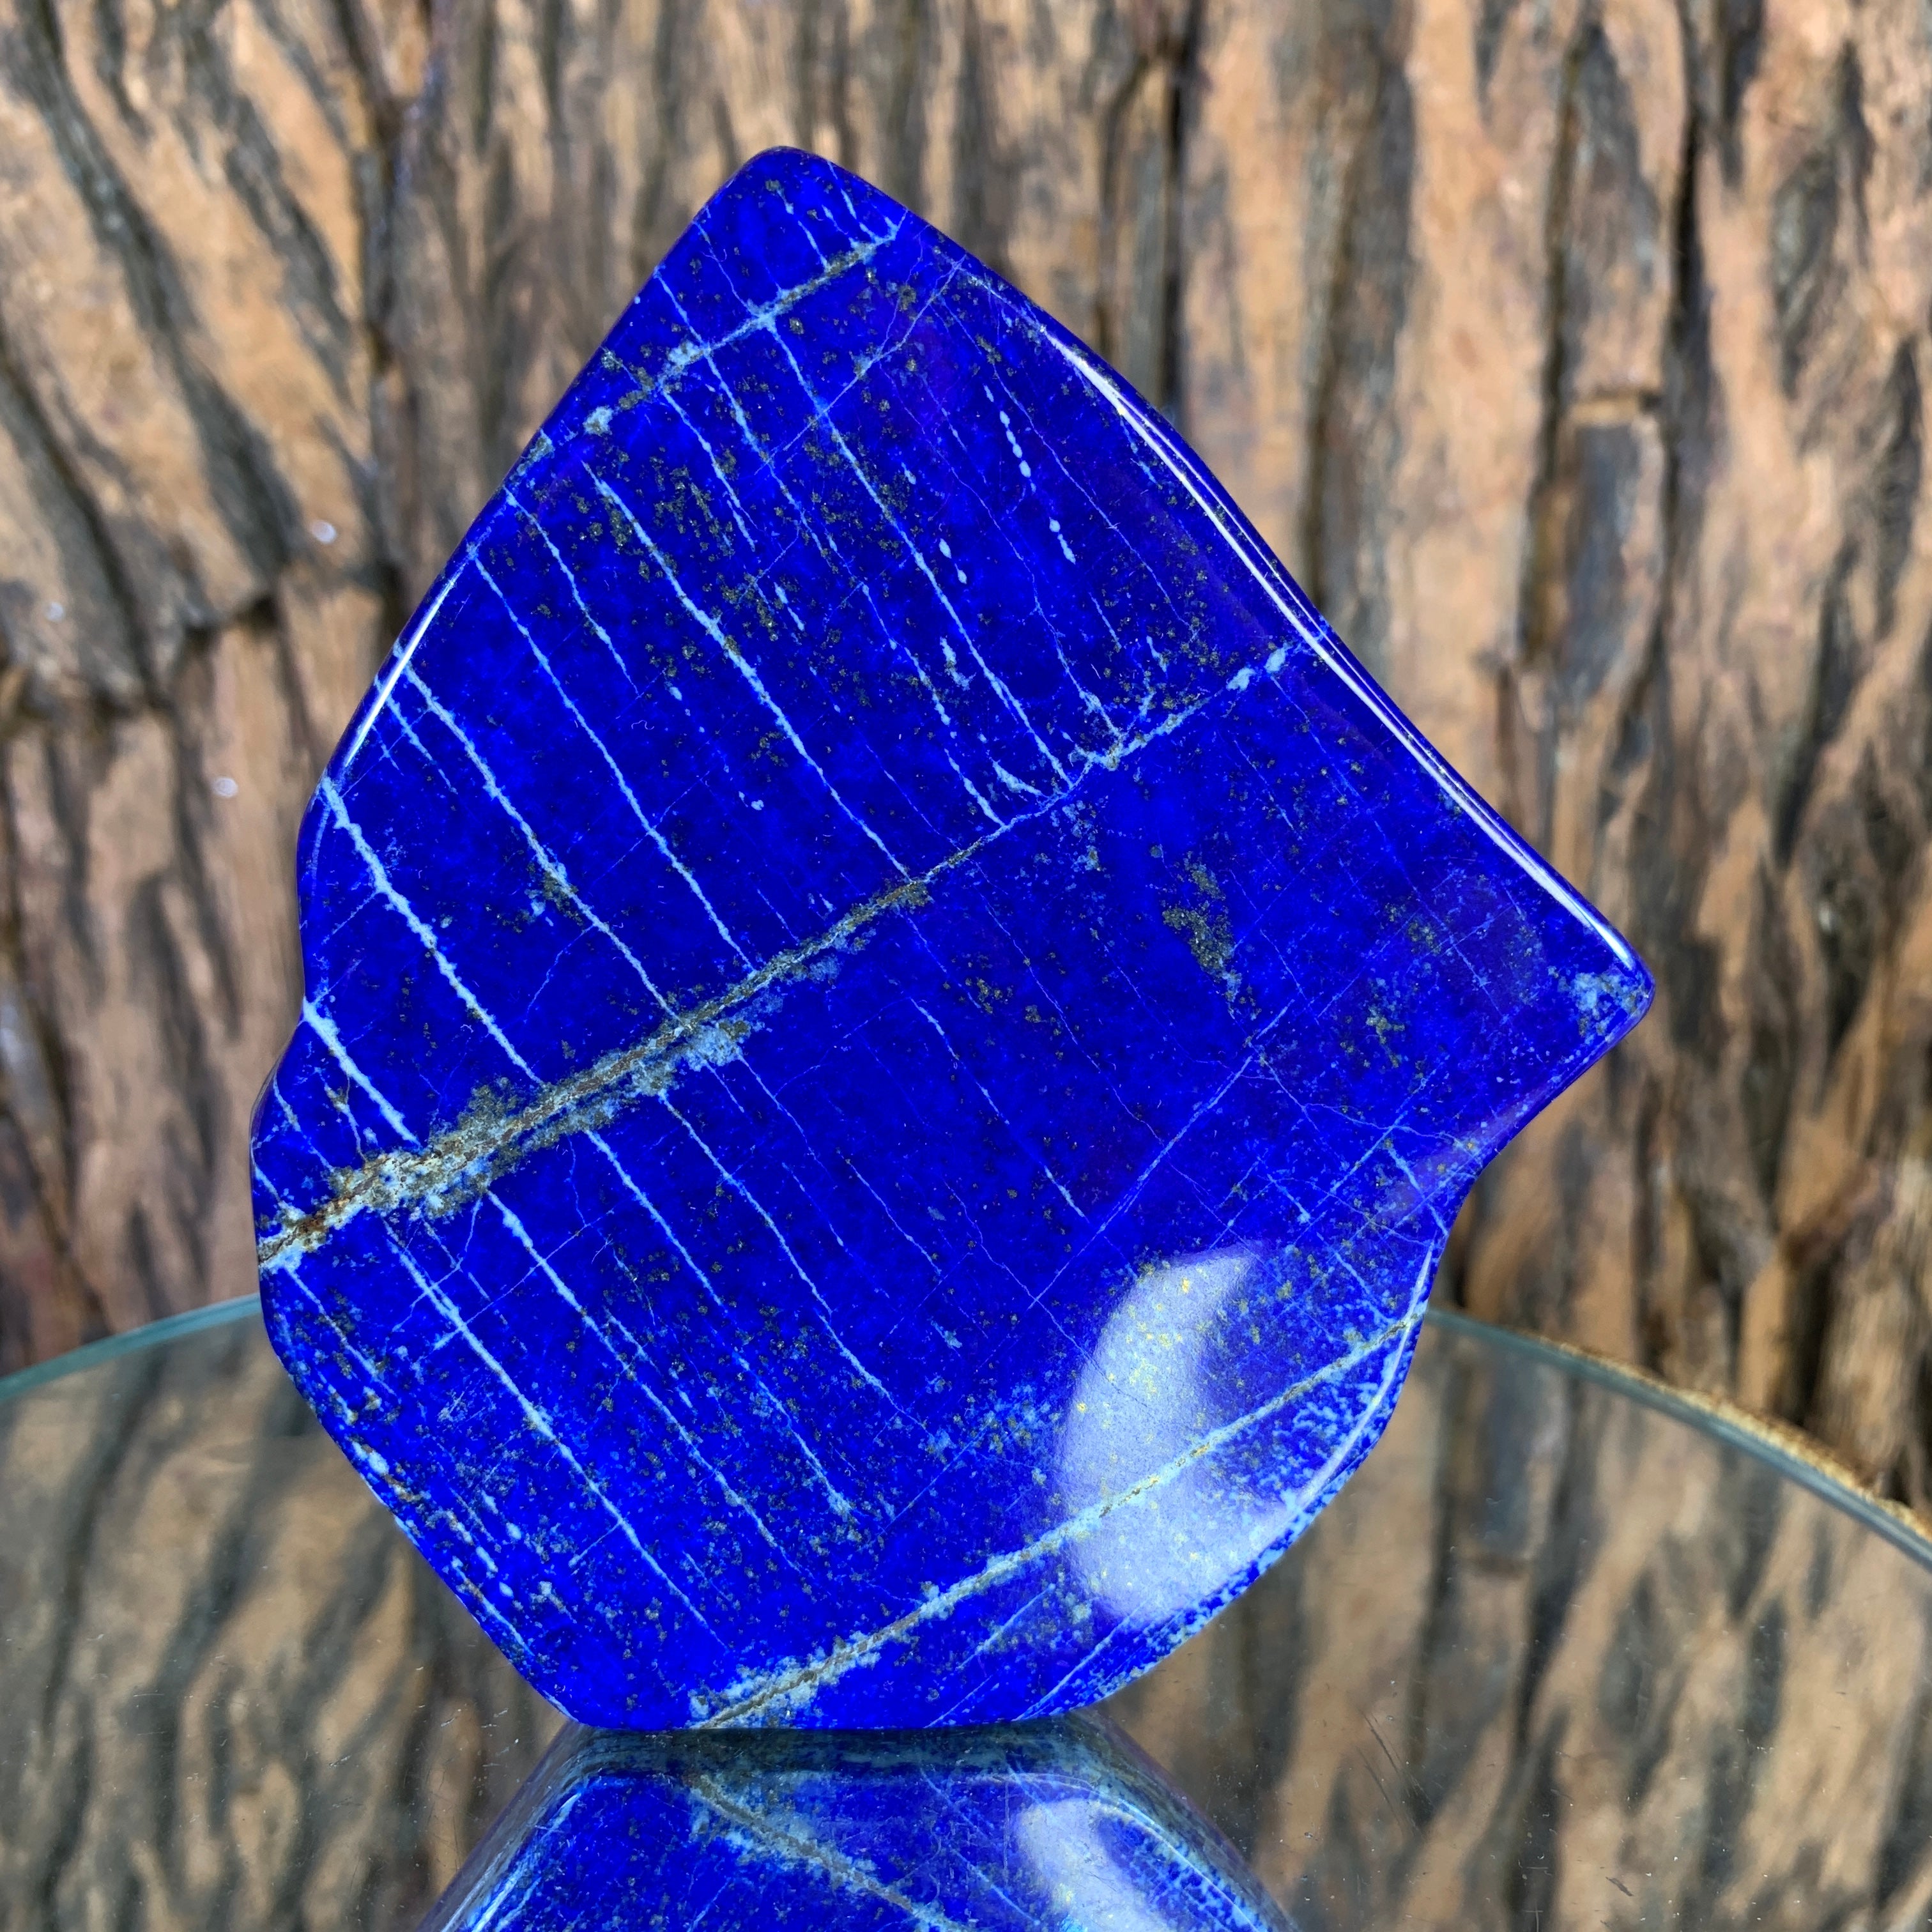 436.0g 9x9x2cm Dark Blue Lapis Lazuli Natural Shape from Afghanistan